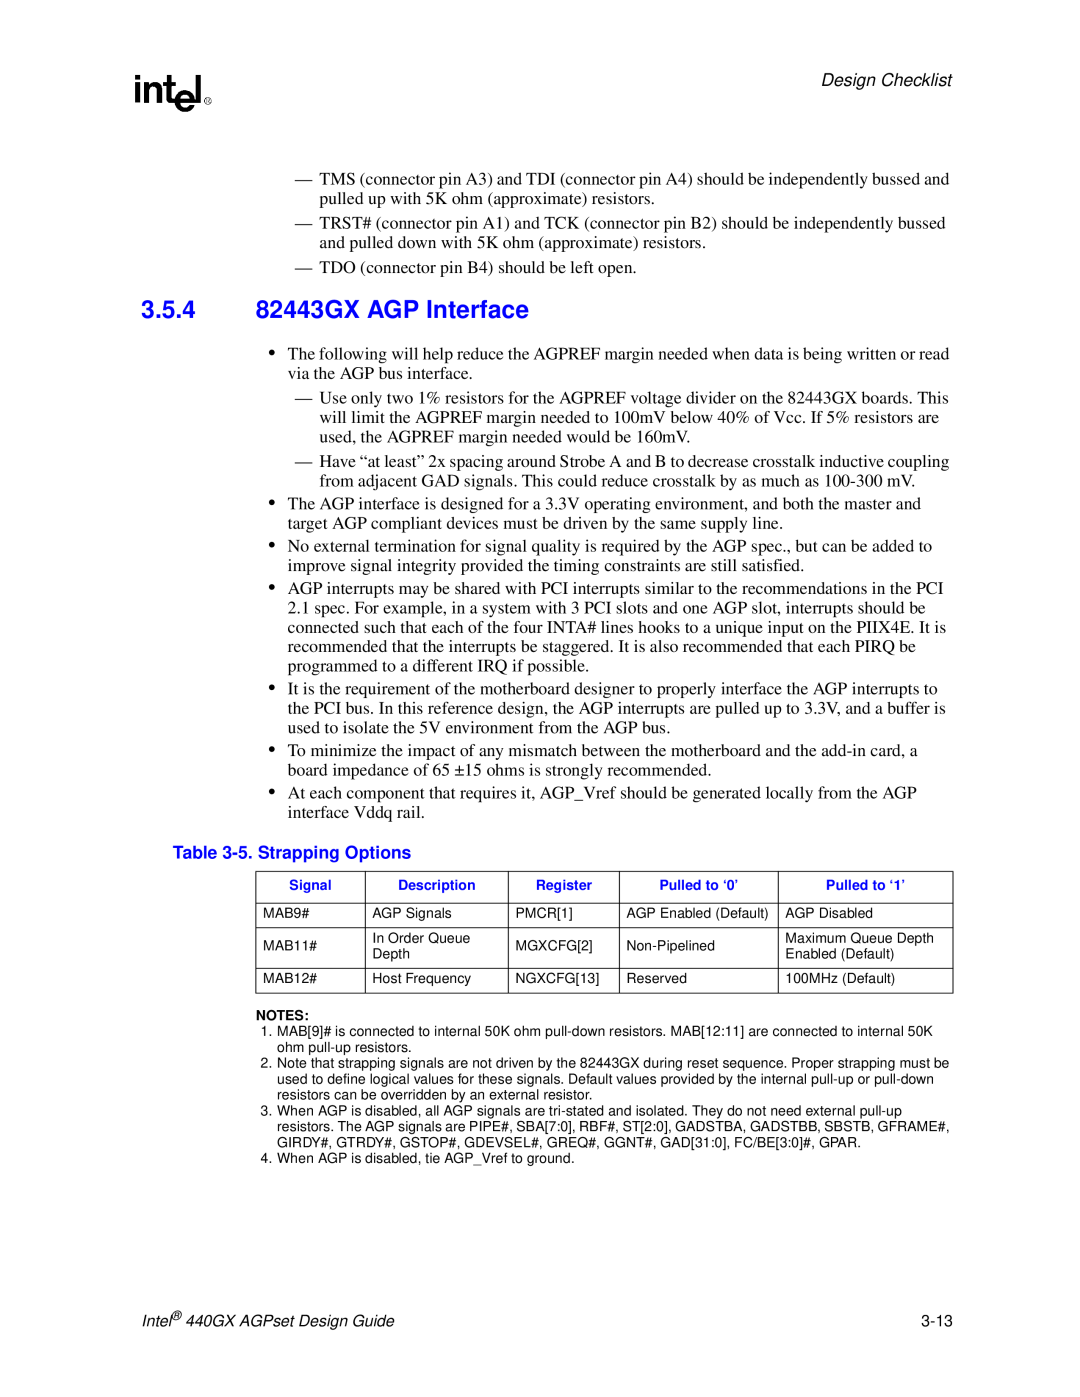 Intel 440GX manual 3.5.4 82443GX AGP Interface, 5. Strapping Options, Design Checklist 